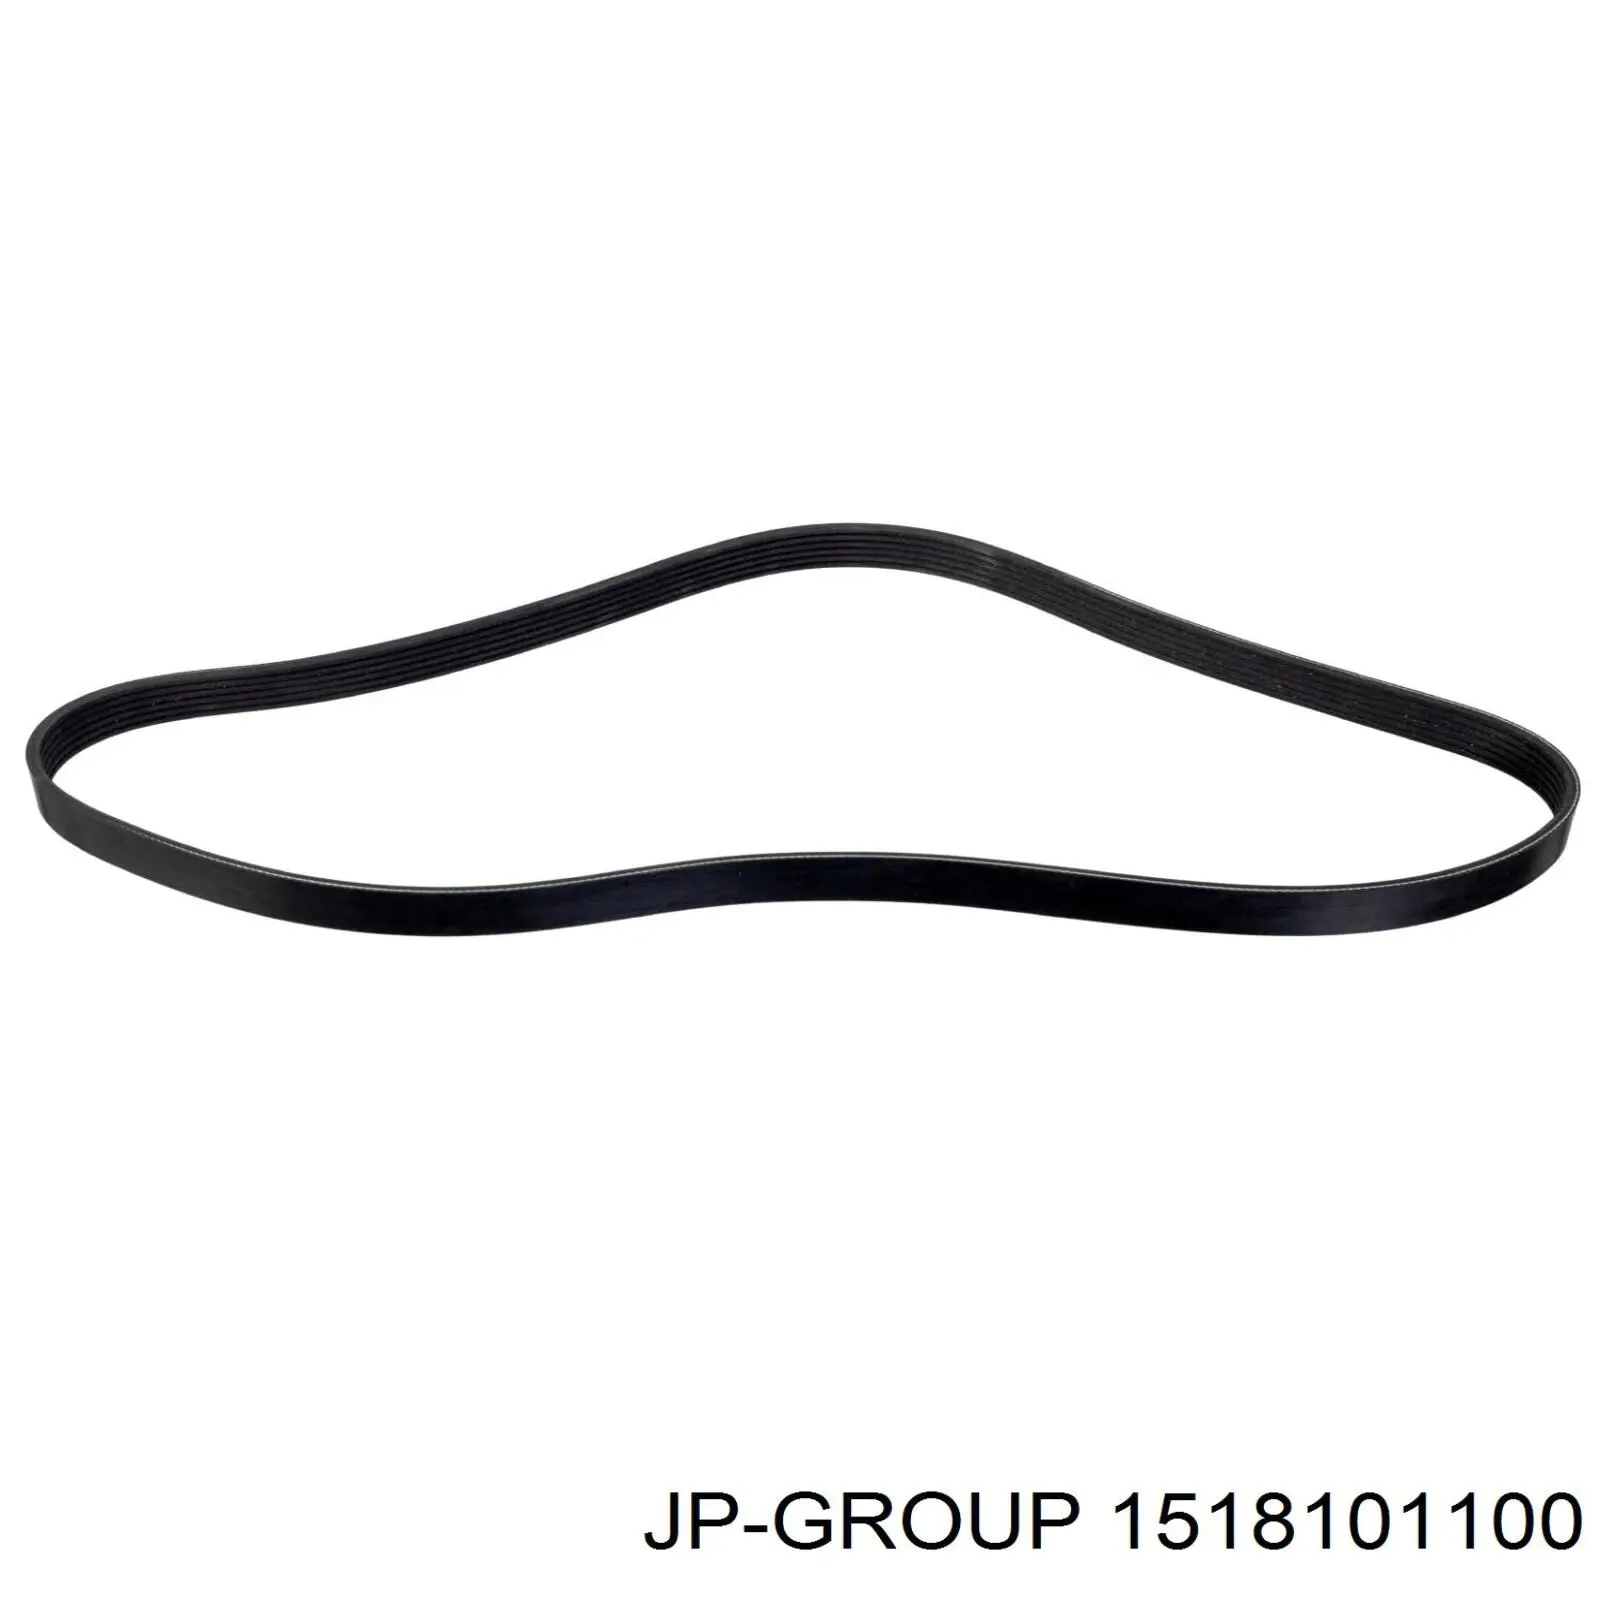 1518101100 JP Group correa trapezoidal